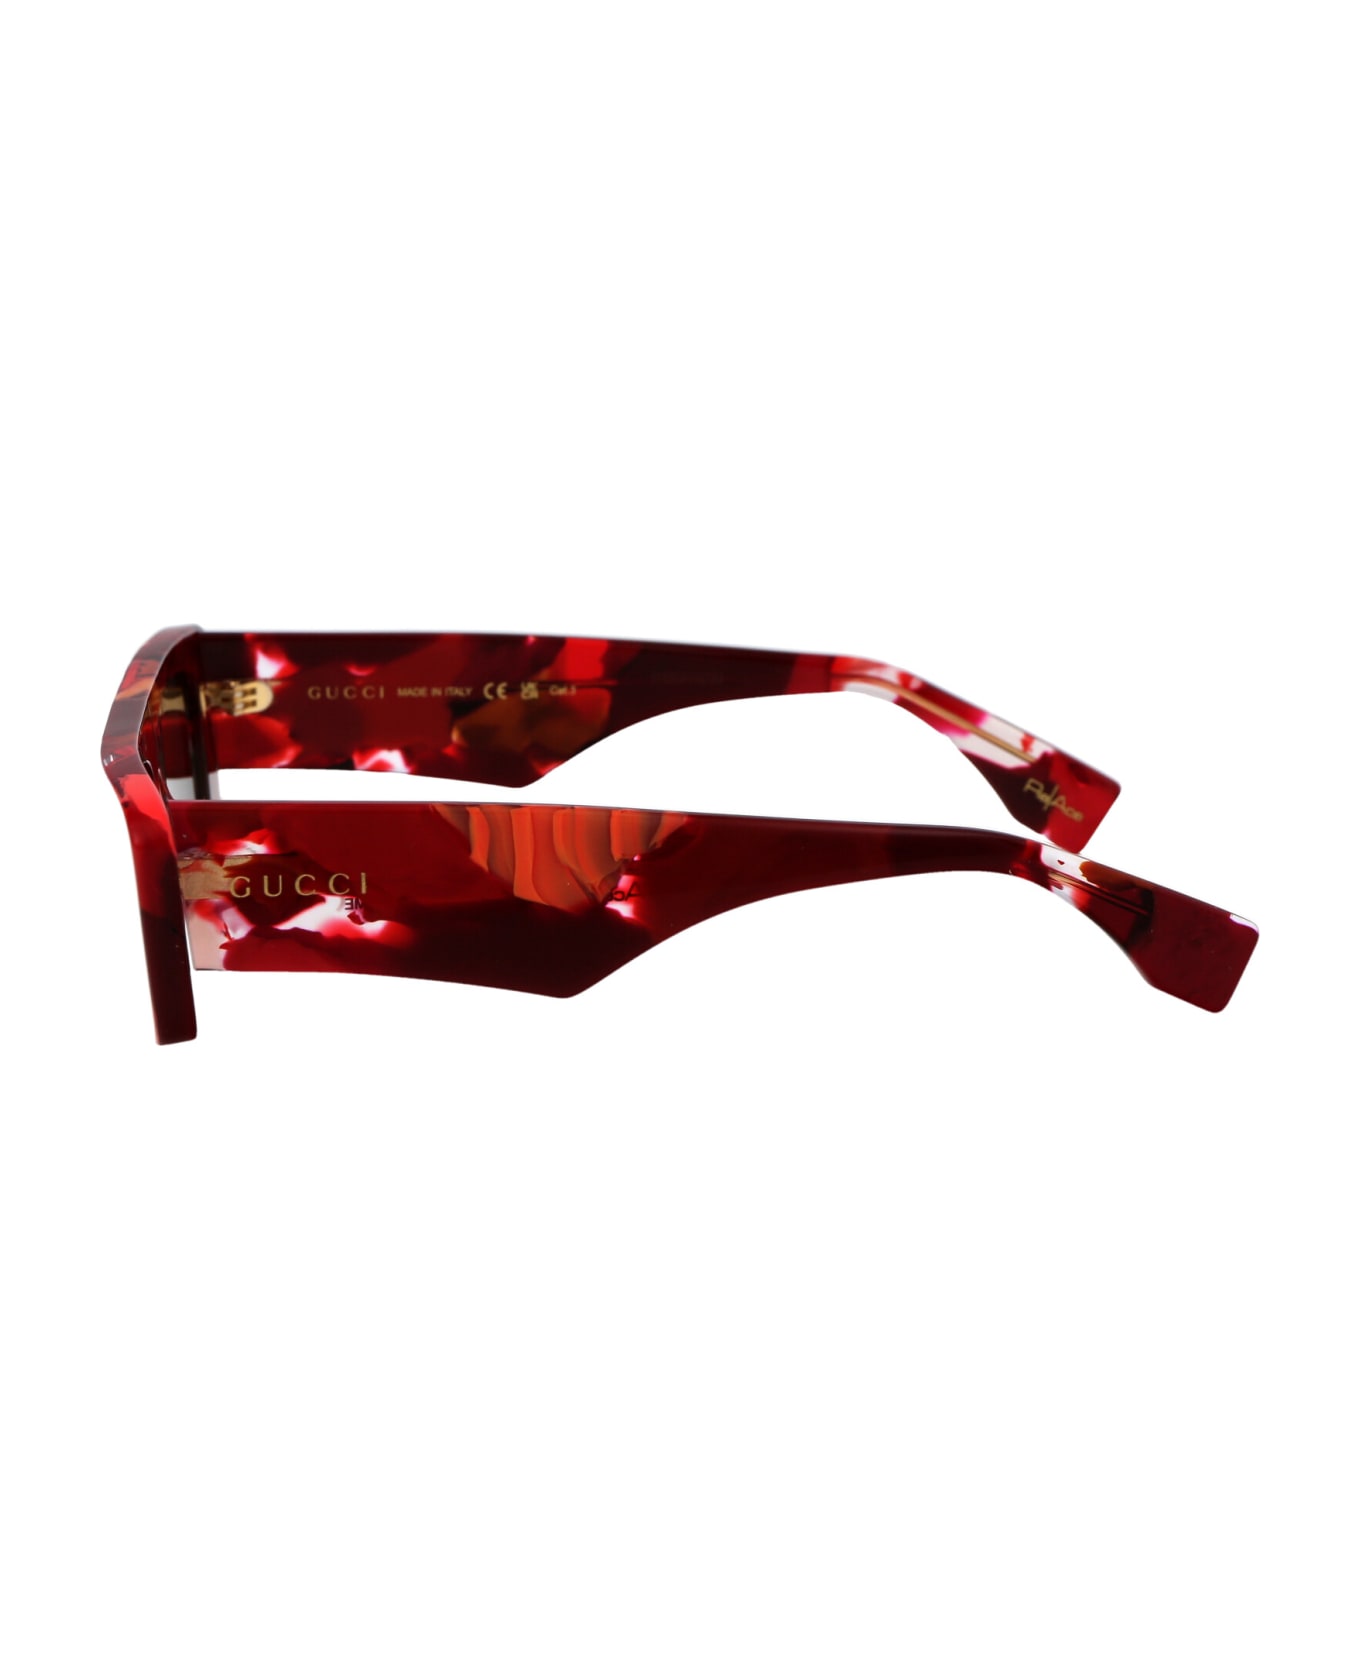 Gucci Eyewear Gg1625s Sunglasses - 002 RED RED GREY